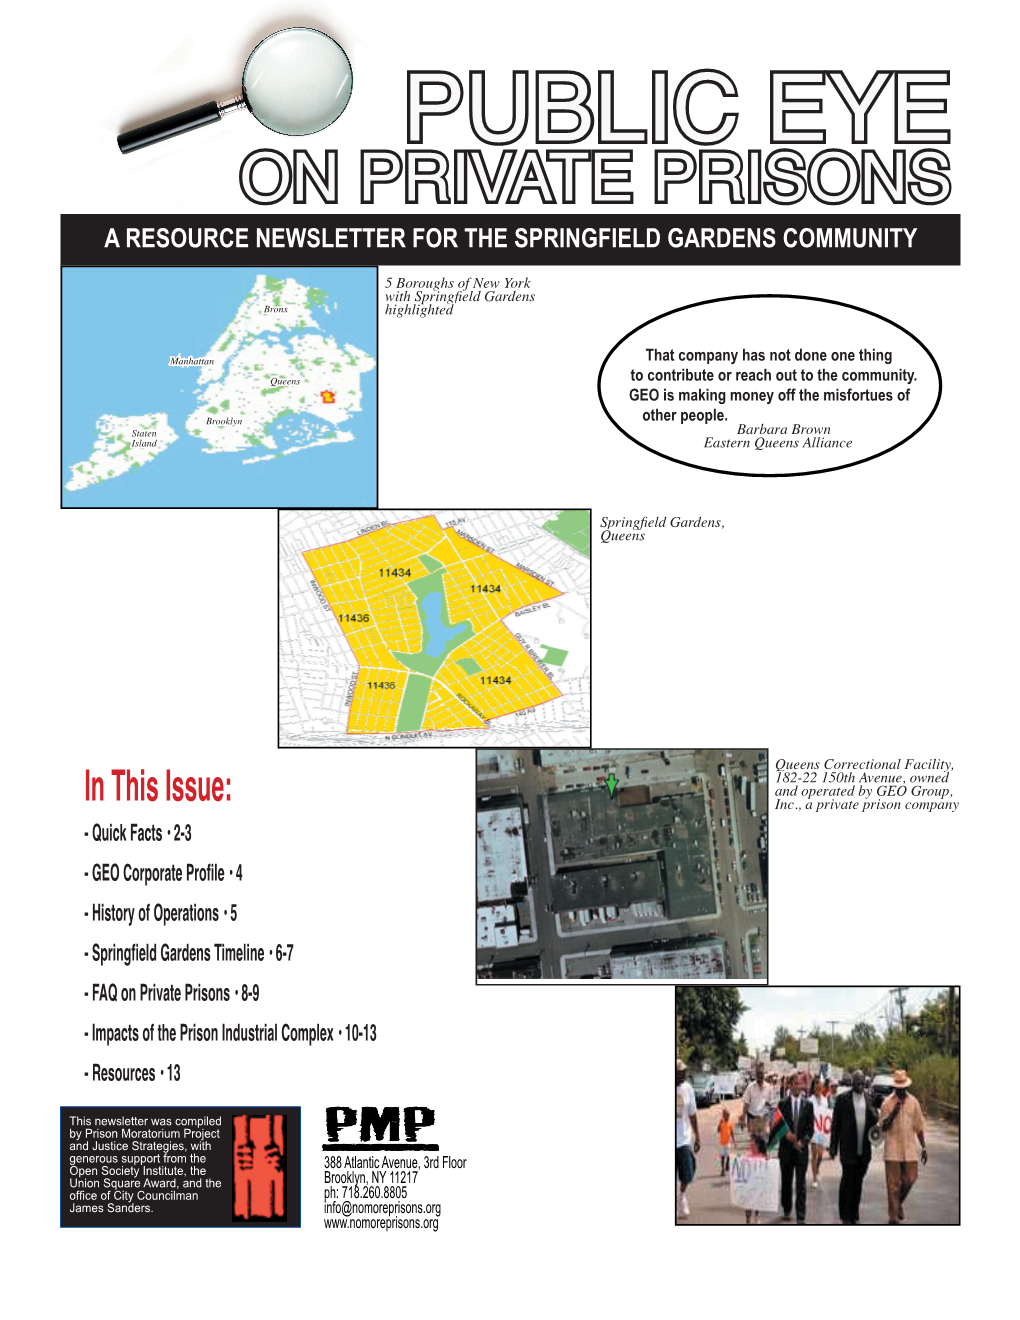 Publiceye on Privateprison 16PG.Indd